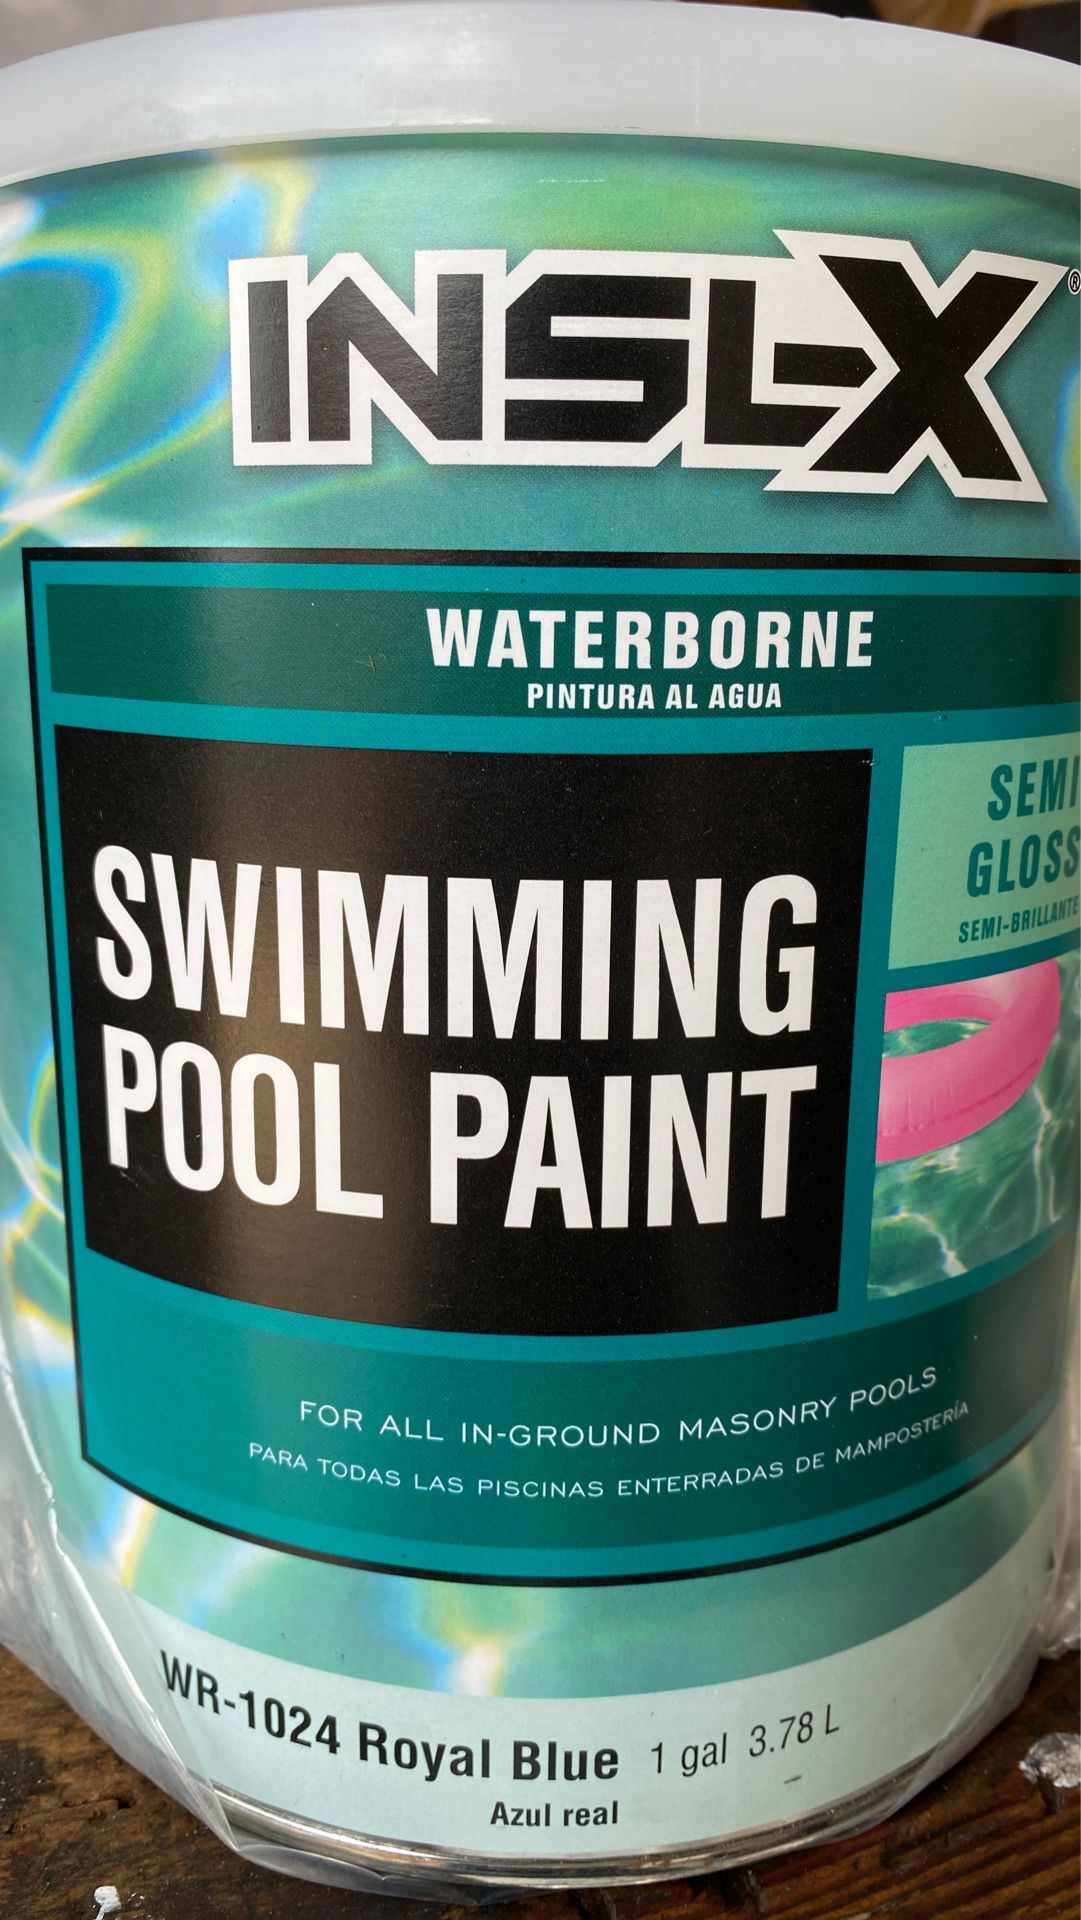 Swimming pool paint